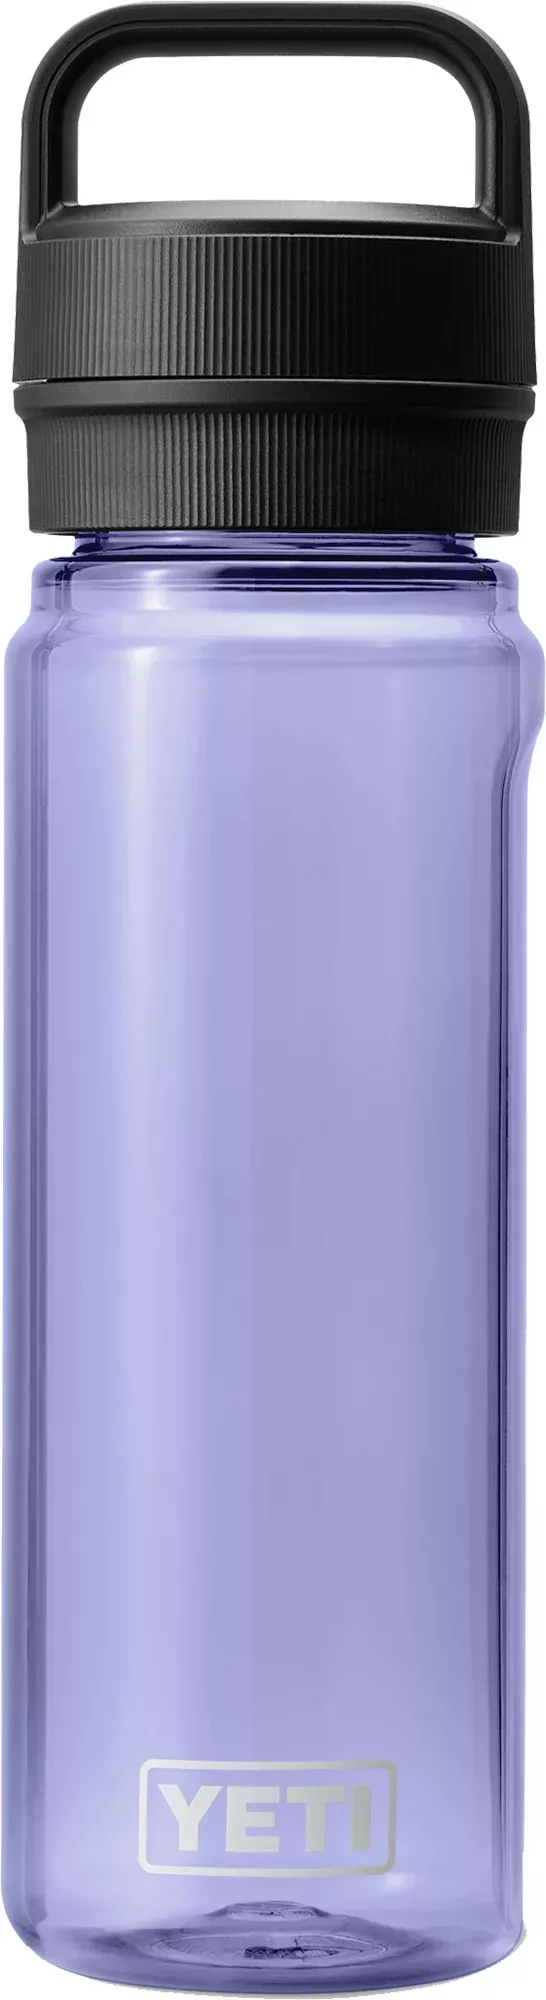 Yeti Hopper Flip 18 Soft Cooler - Cosmic Lilac - Grange Co-op